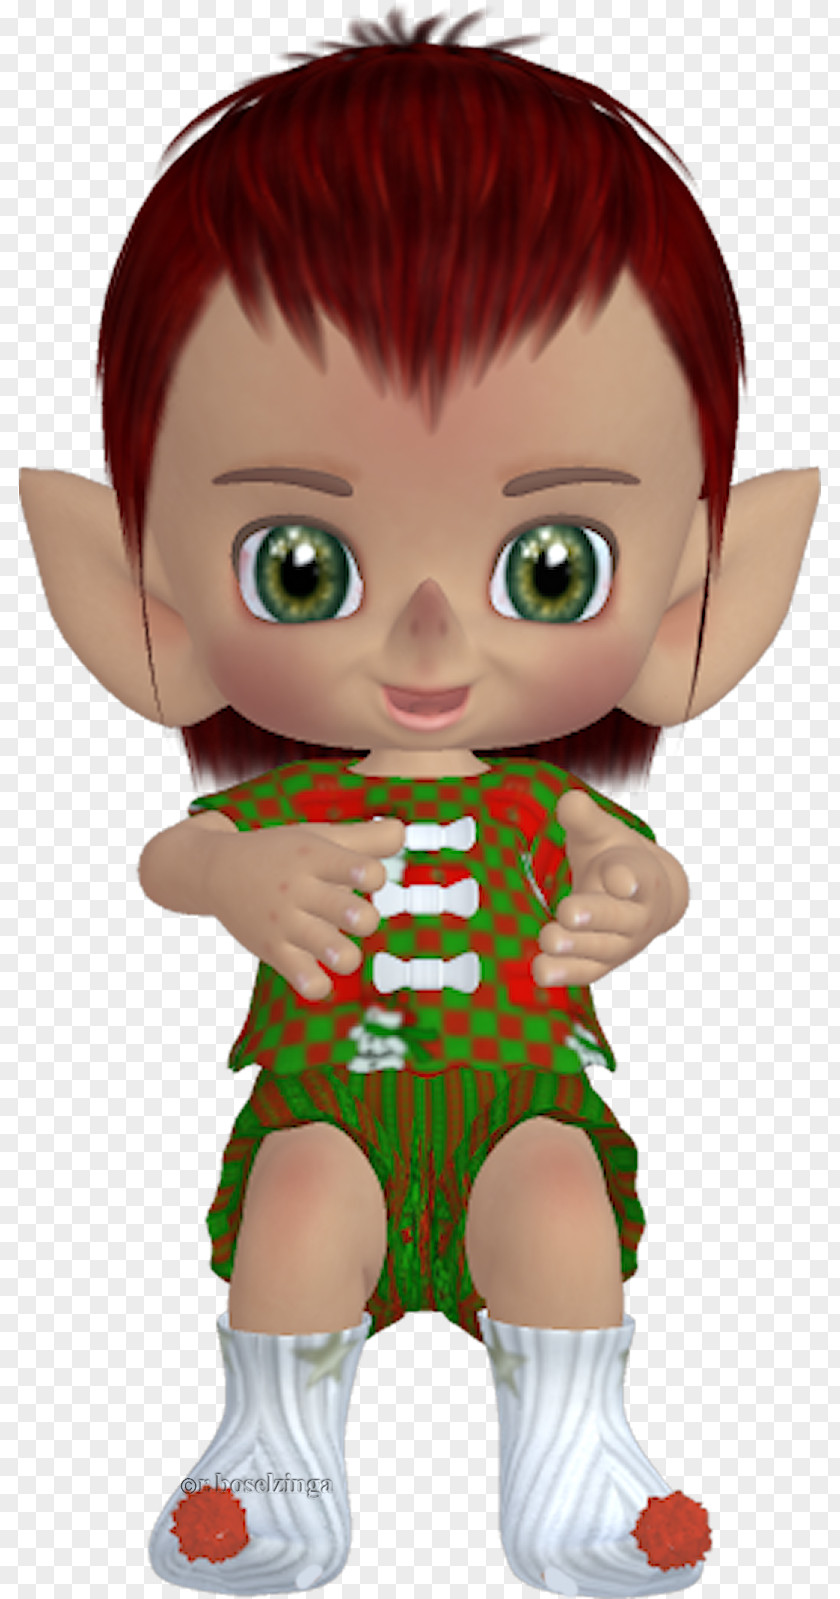 Doll Cartoon Toddler Legendary Creature PNG